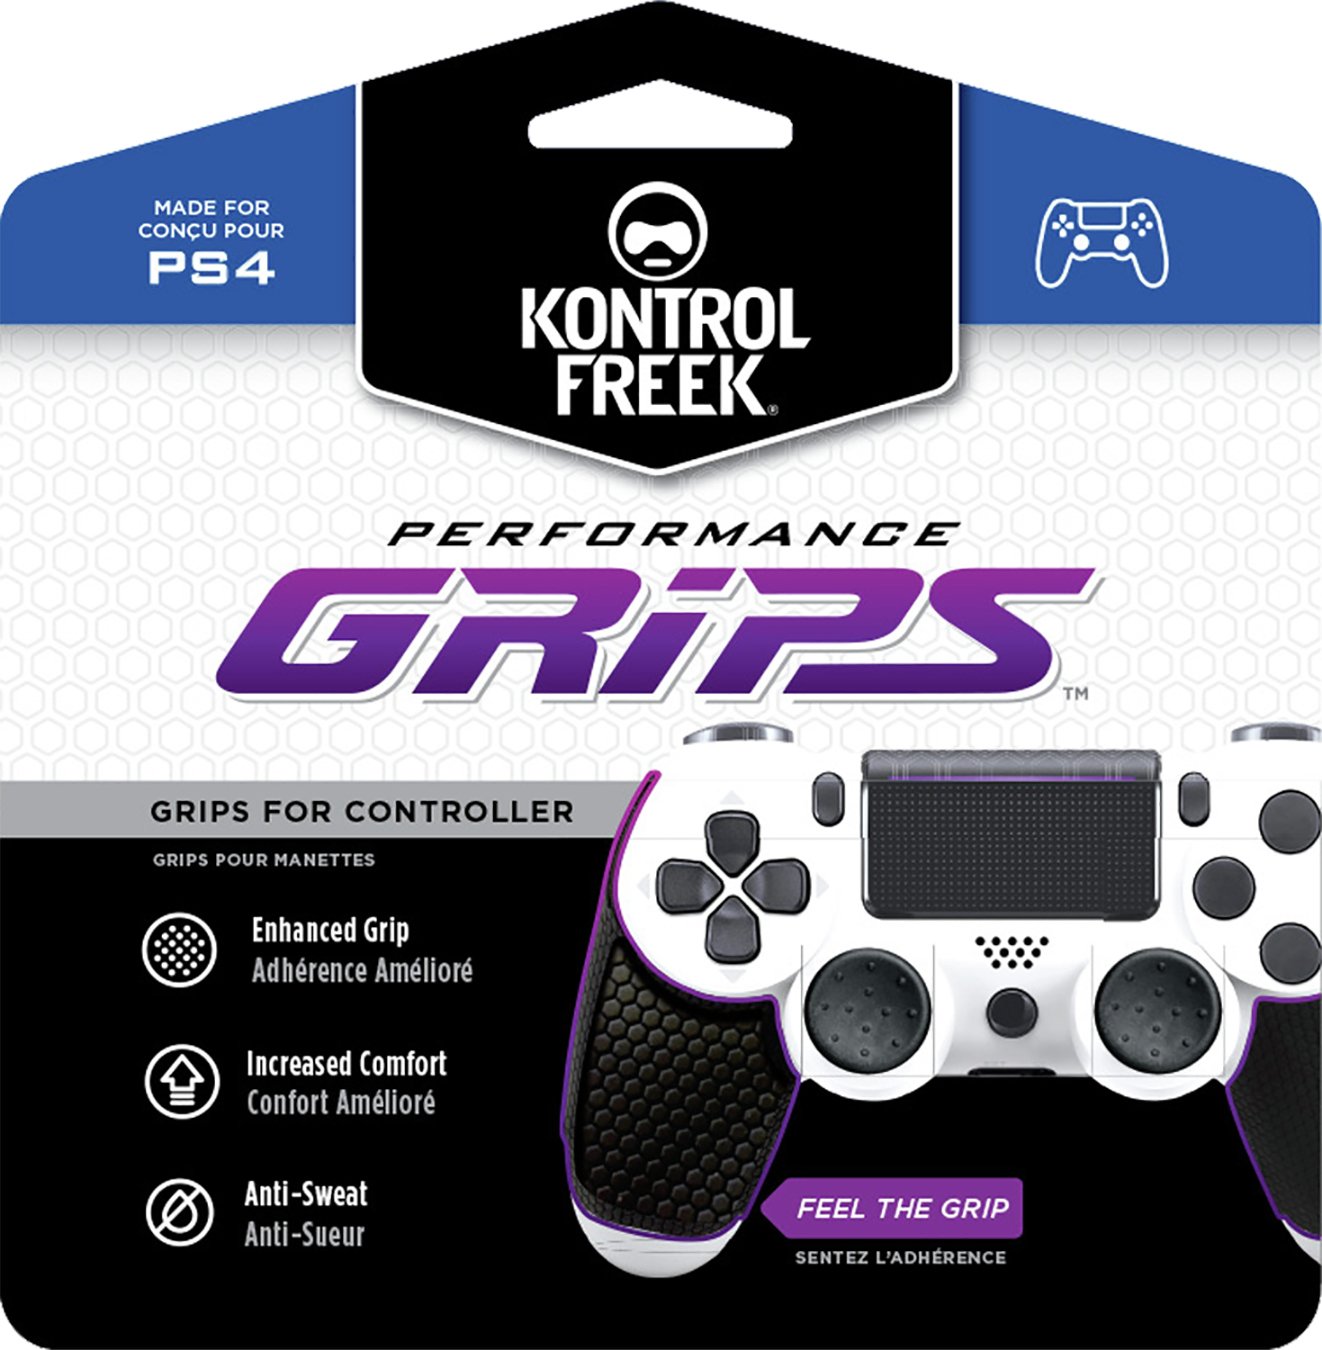 KontrolFreek PS4 Performance Grips